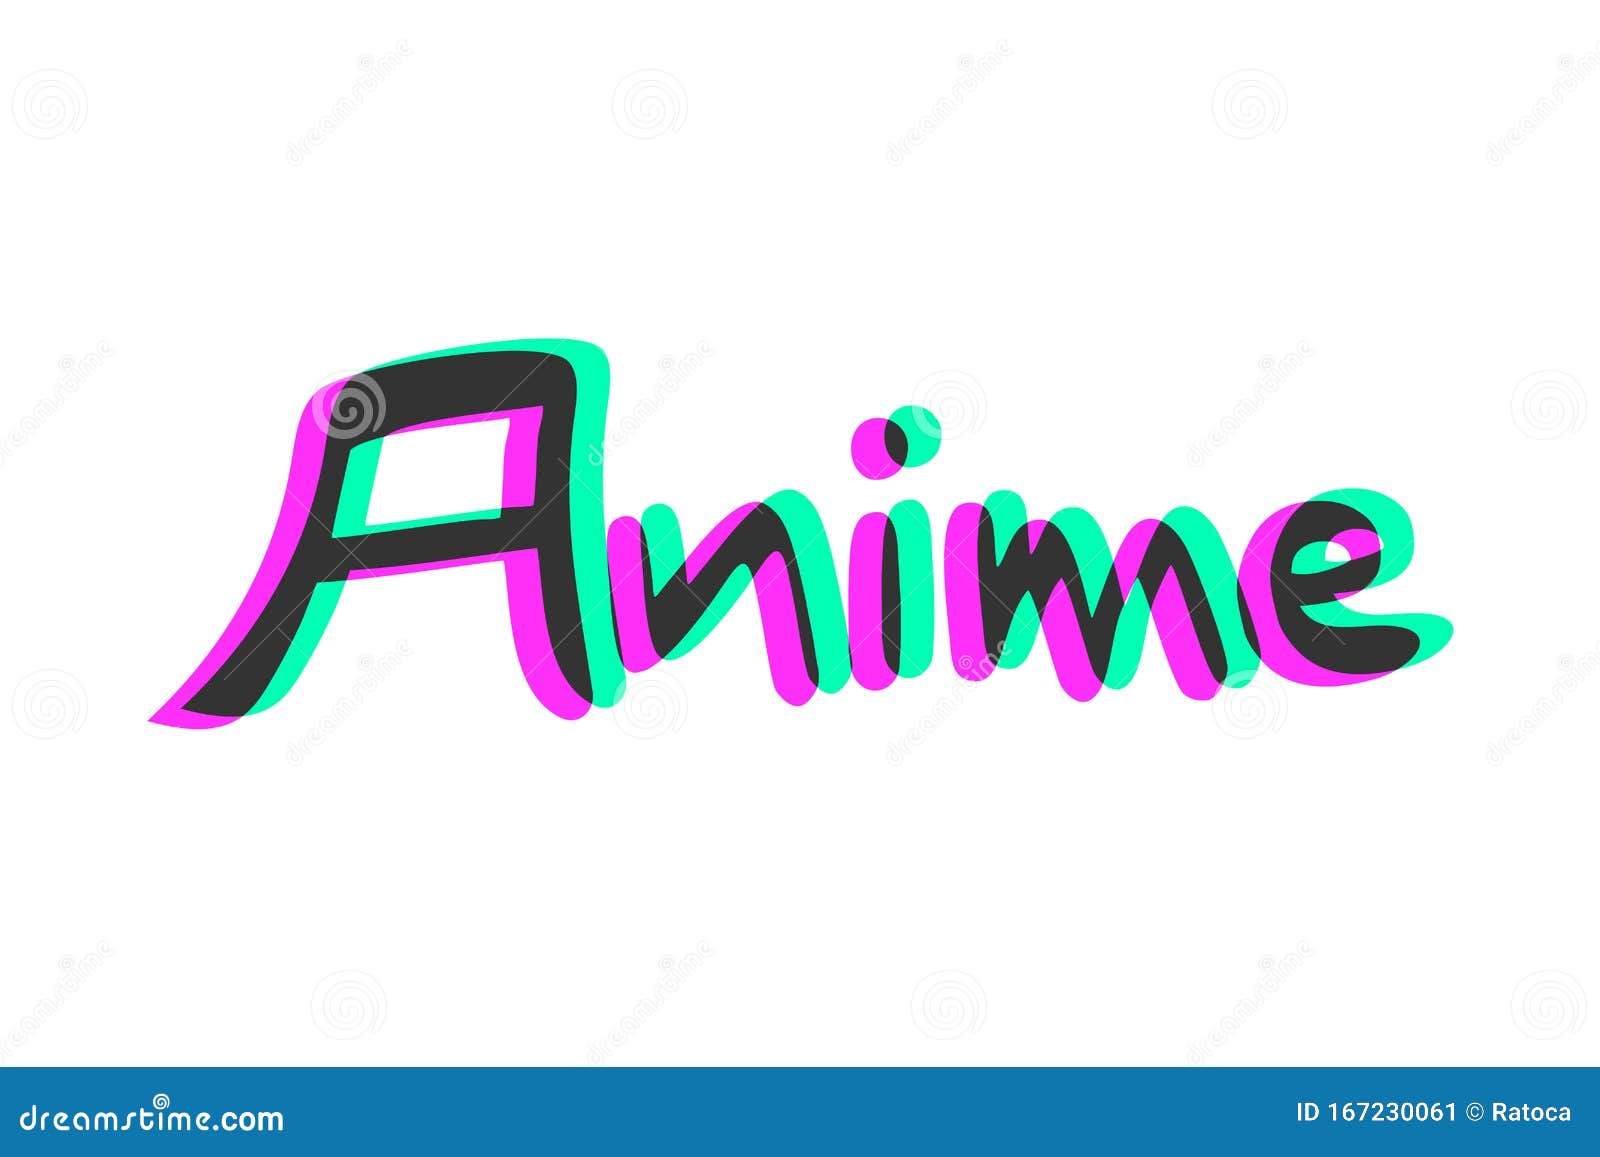 Anime visual effect icon stock vector. Illustration of slogan - 167230061